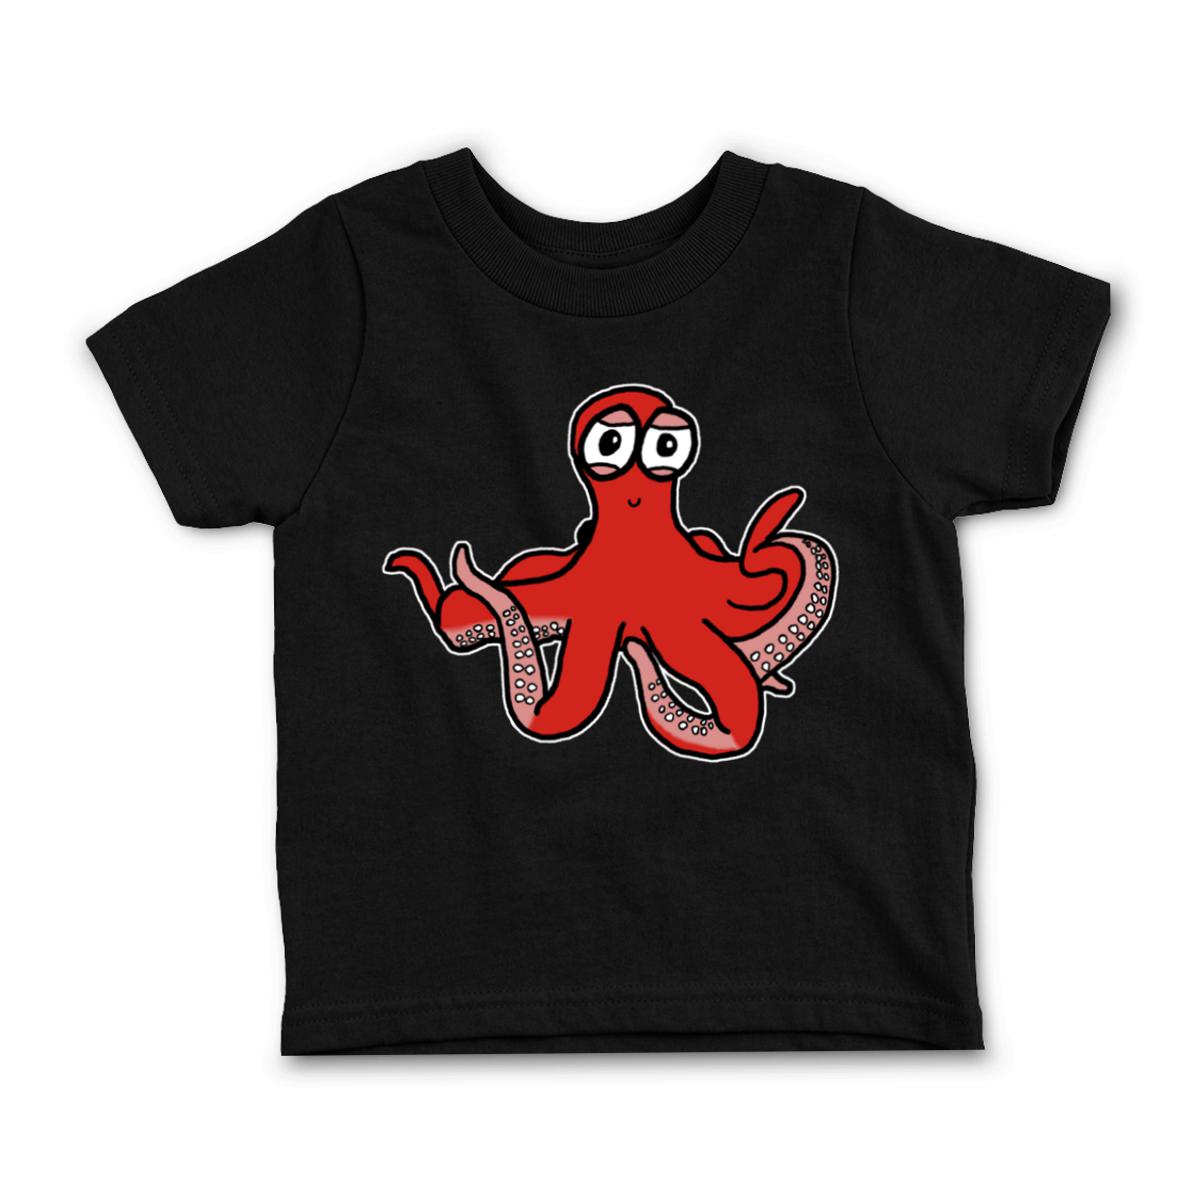 Octopus Toddler Tee 4T black